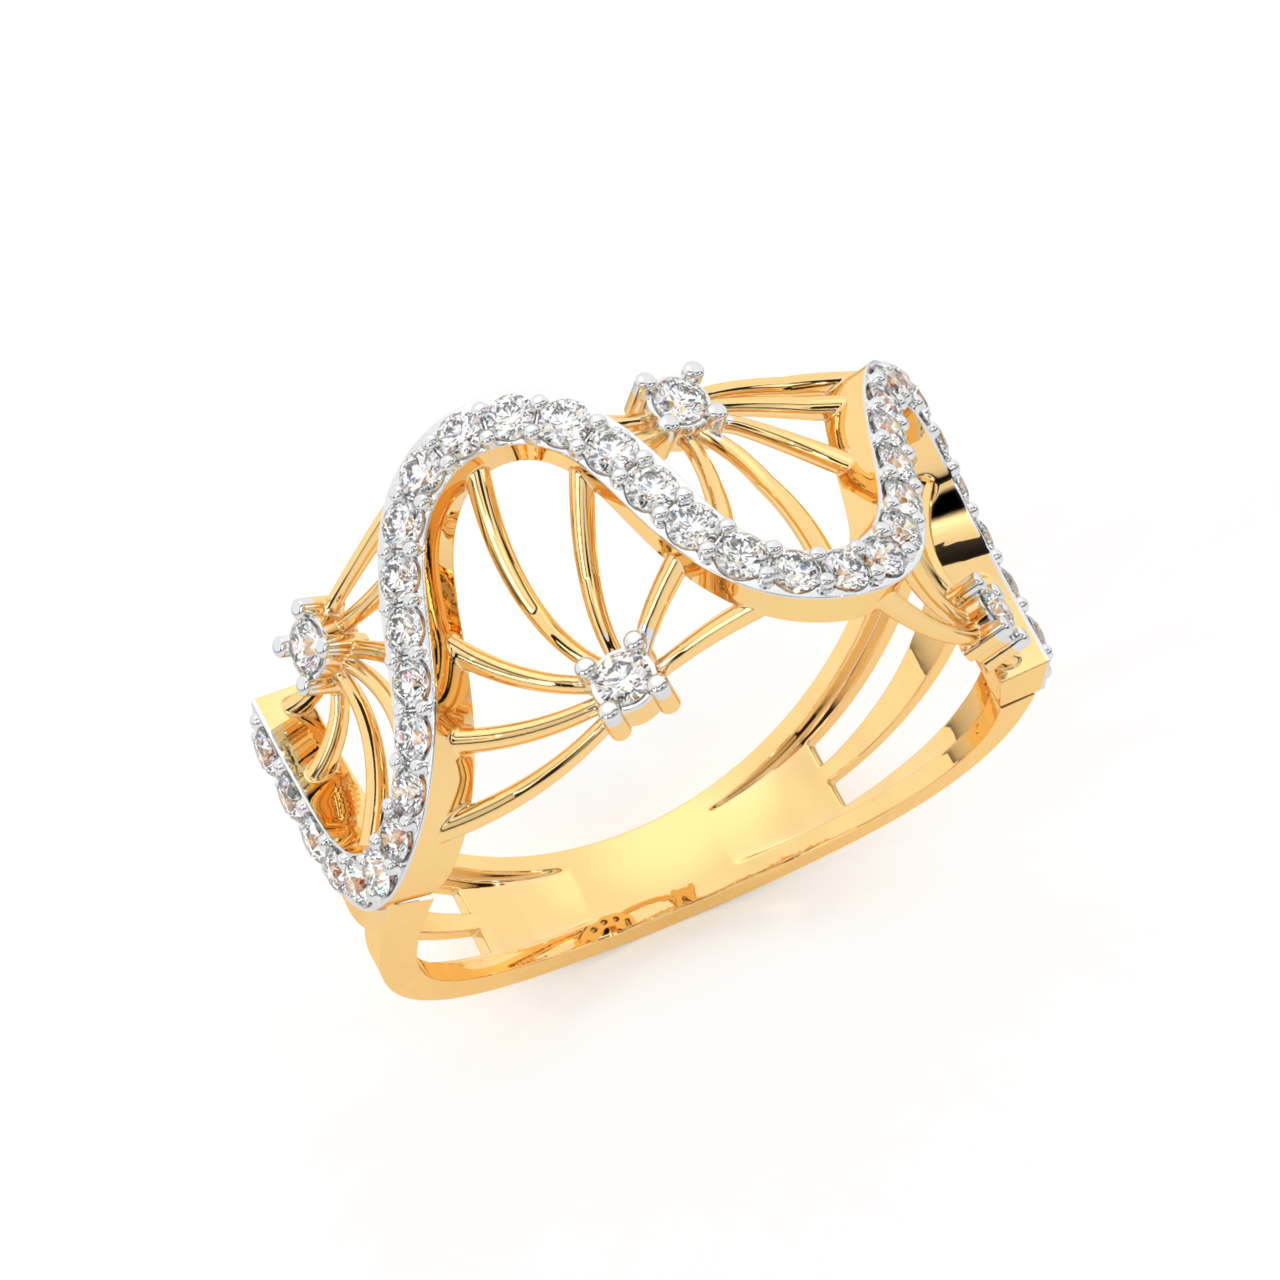 Wavy Style Diamond Engagement Ring